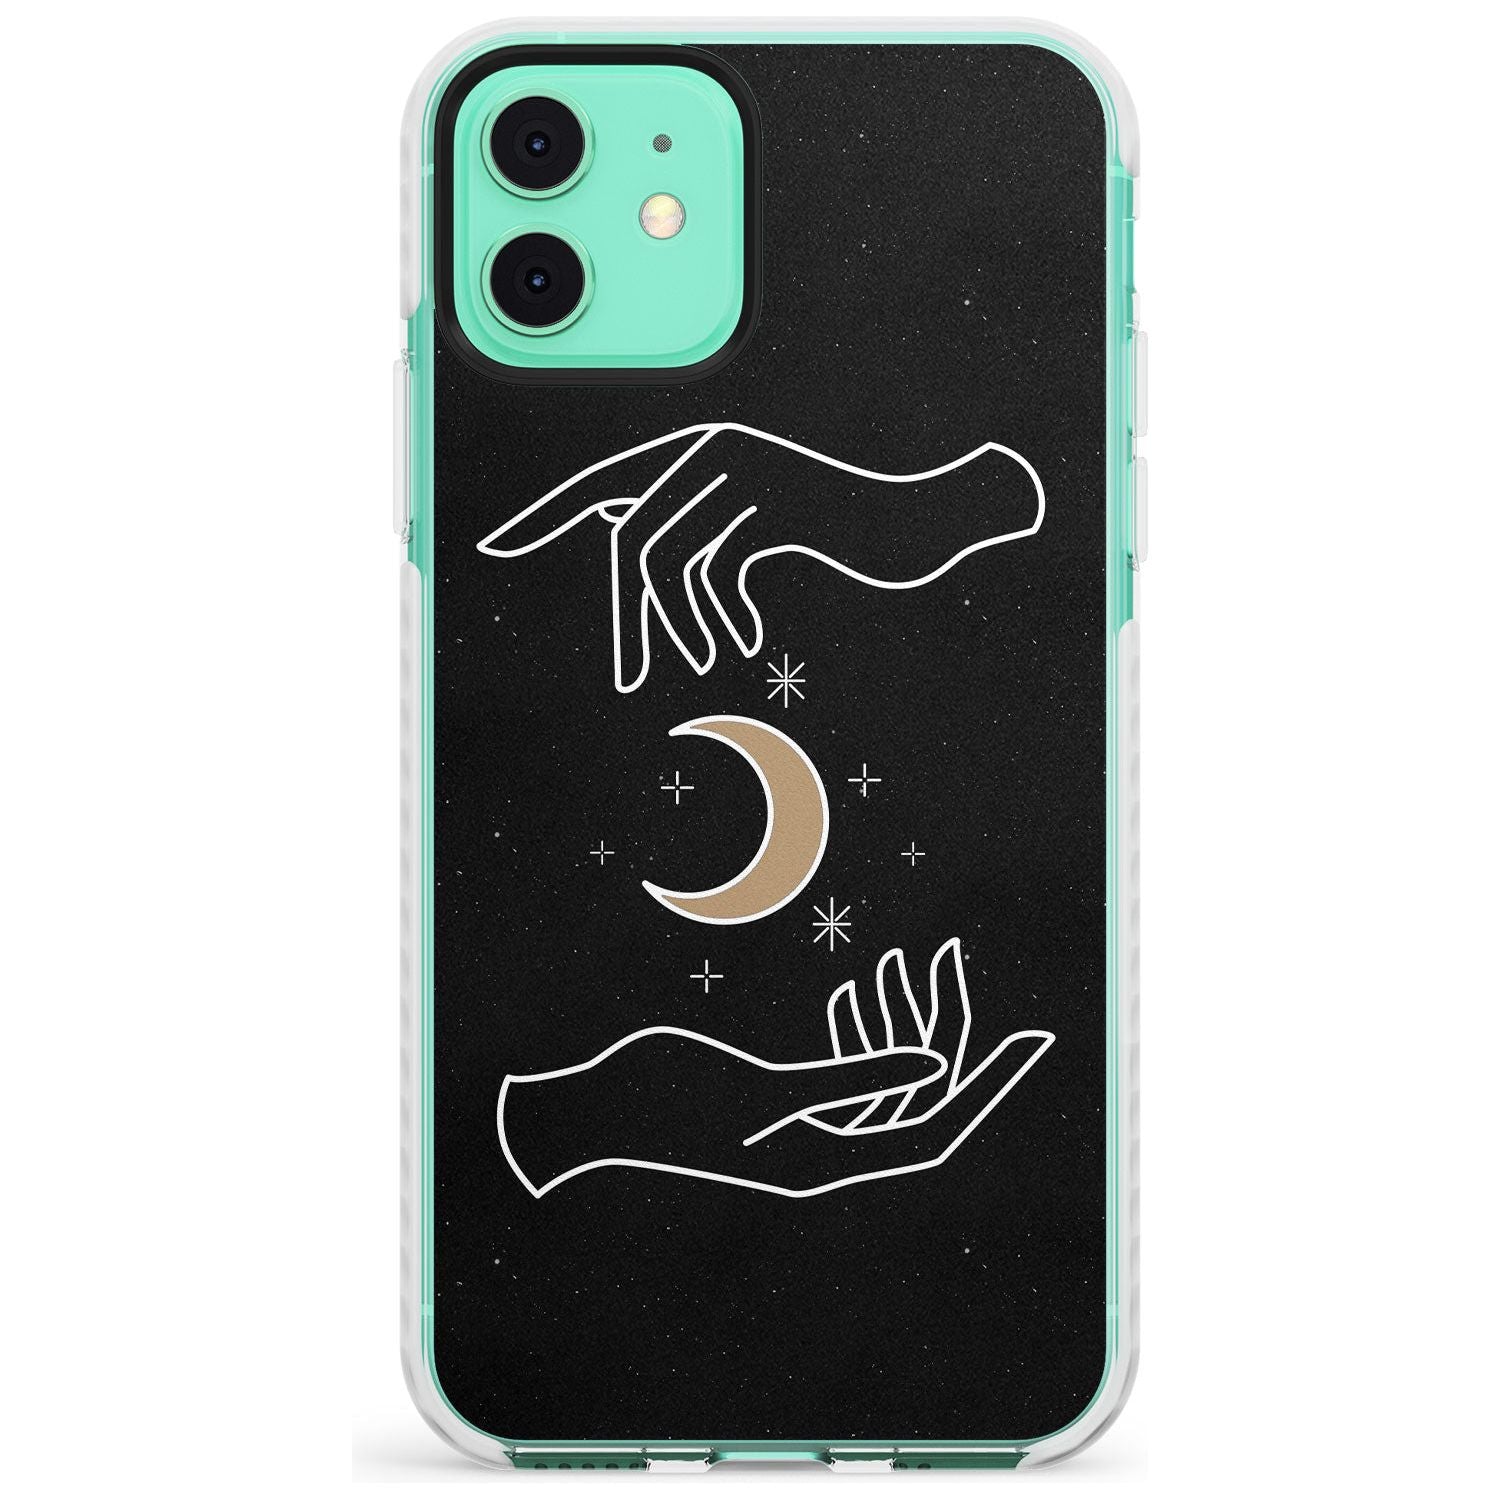 Hands Surrounding Moon Slim TPU Phone Case for iPhone 11